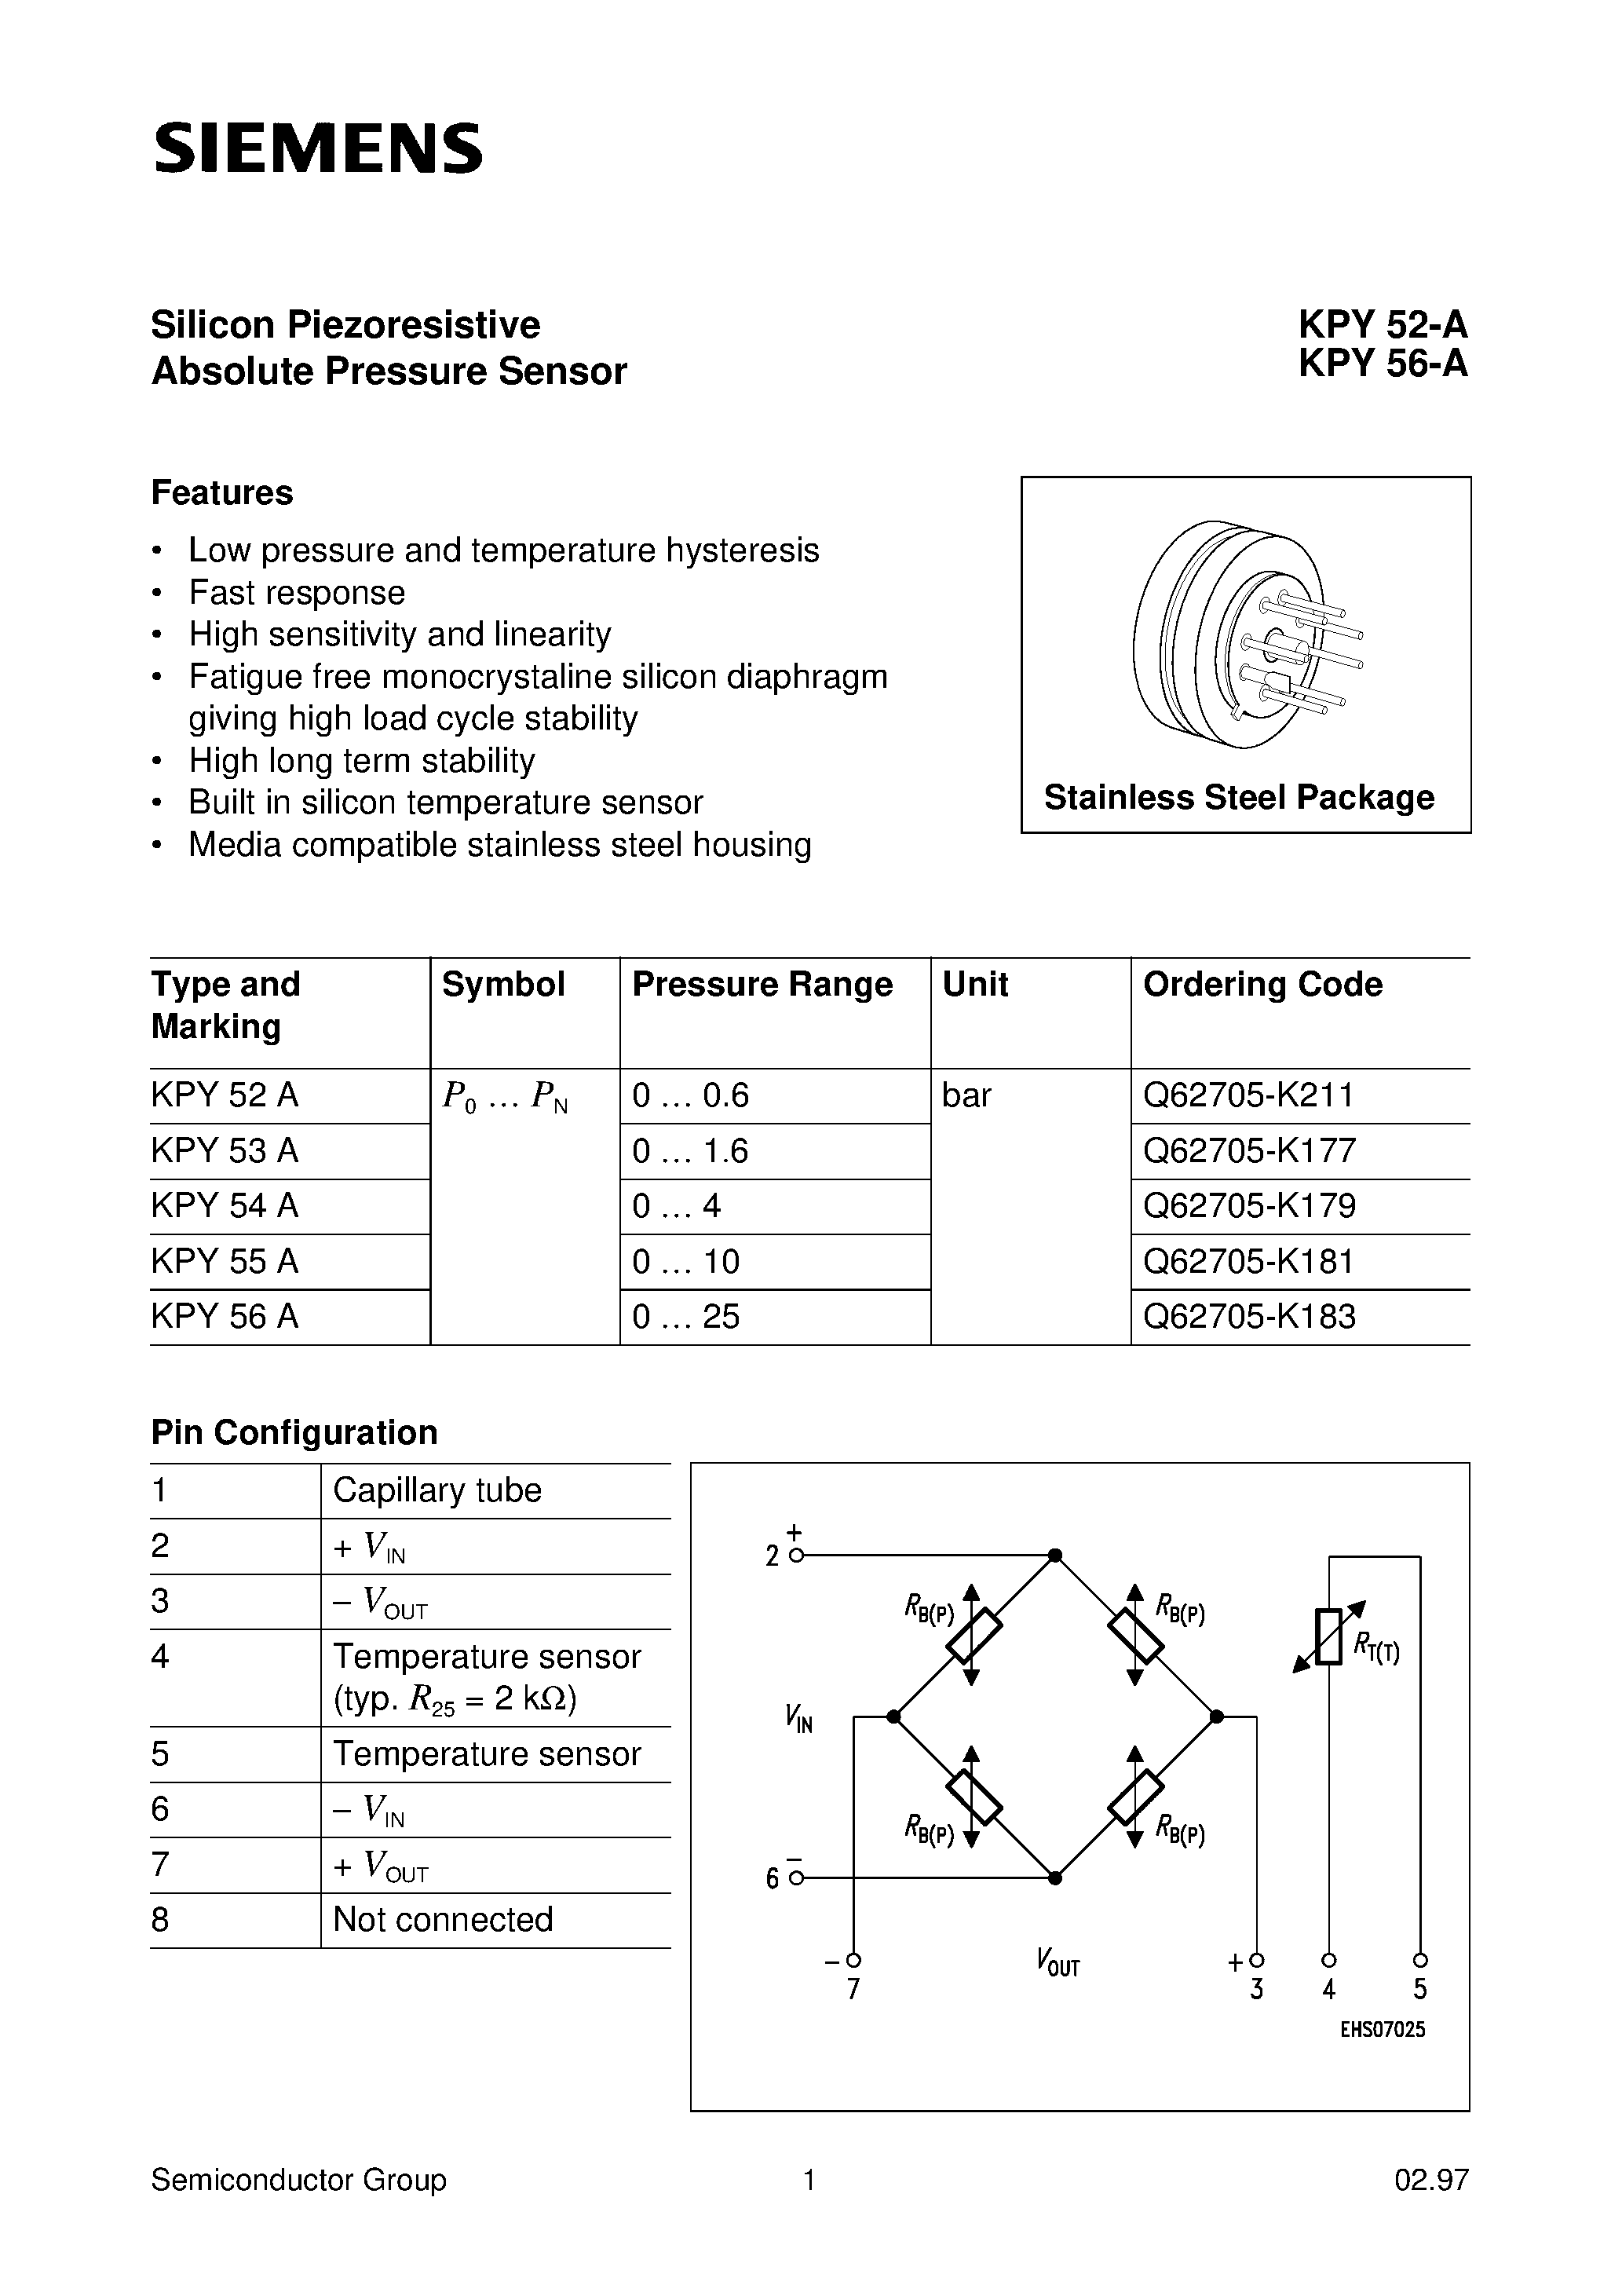 Datasheet KPY52-A - (KPY52-A - KPY56-A) Silicon Piezoresistive Absolute Pressure Sensor page 1